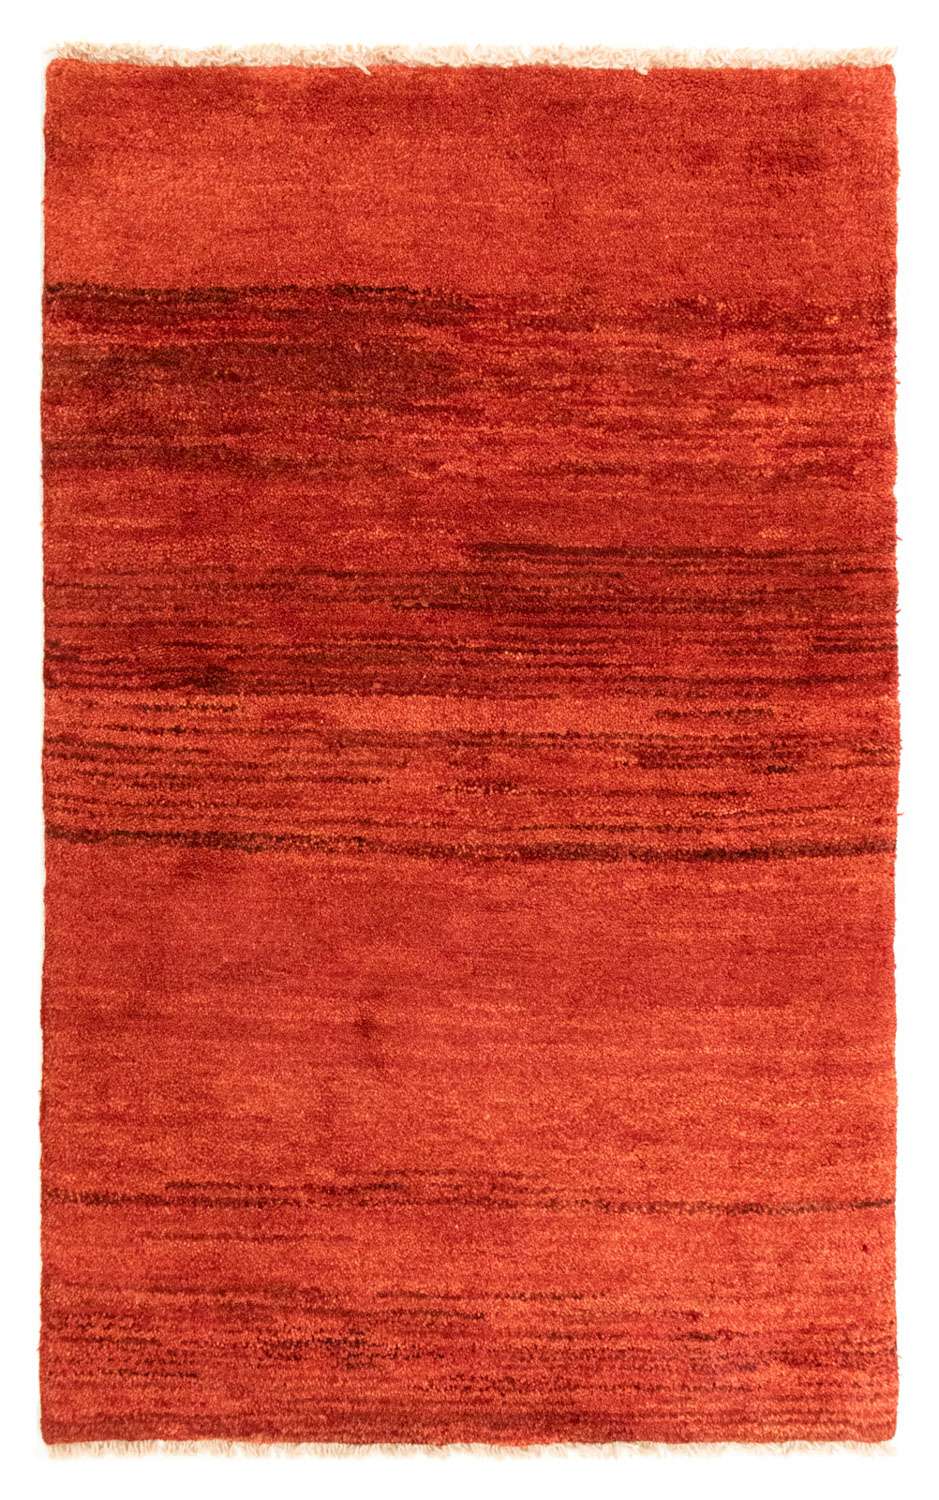 Gabbeh Rug - Perser - 122 x 73 cm - red